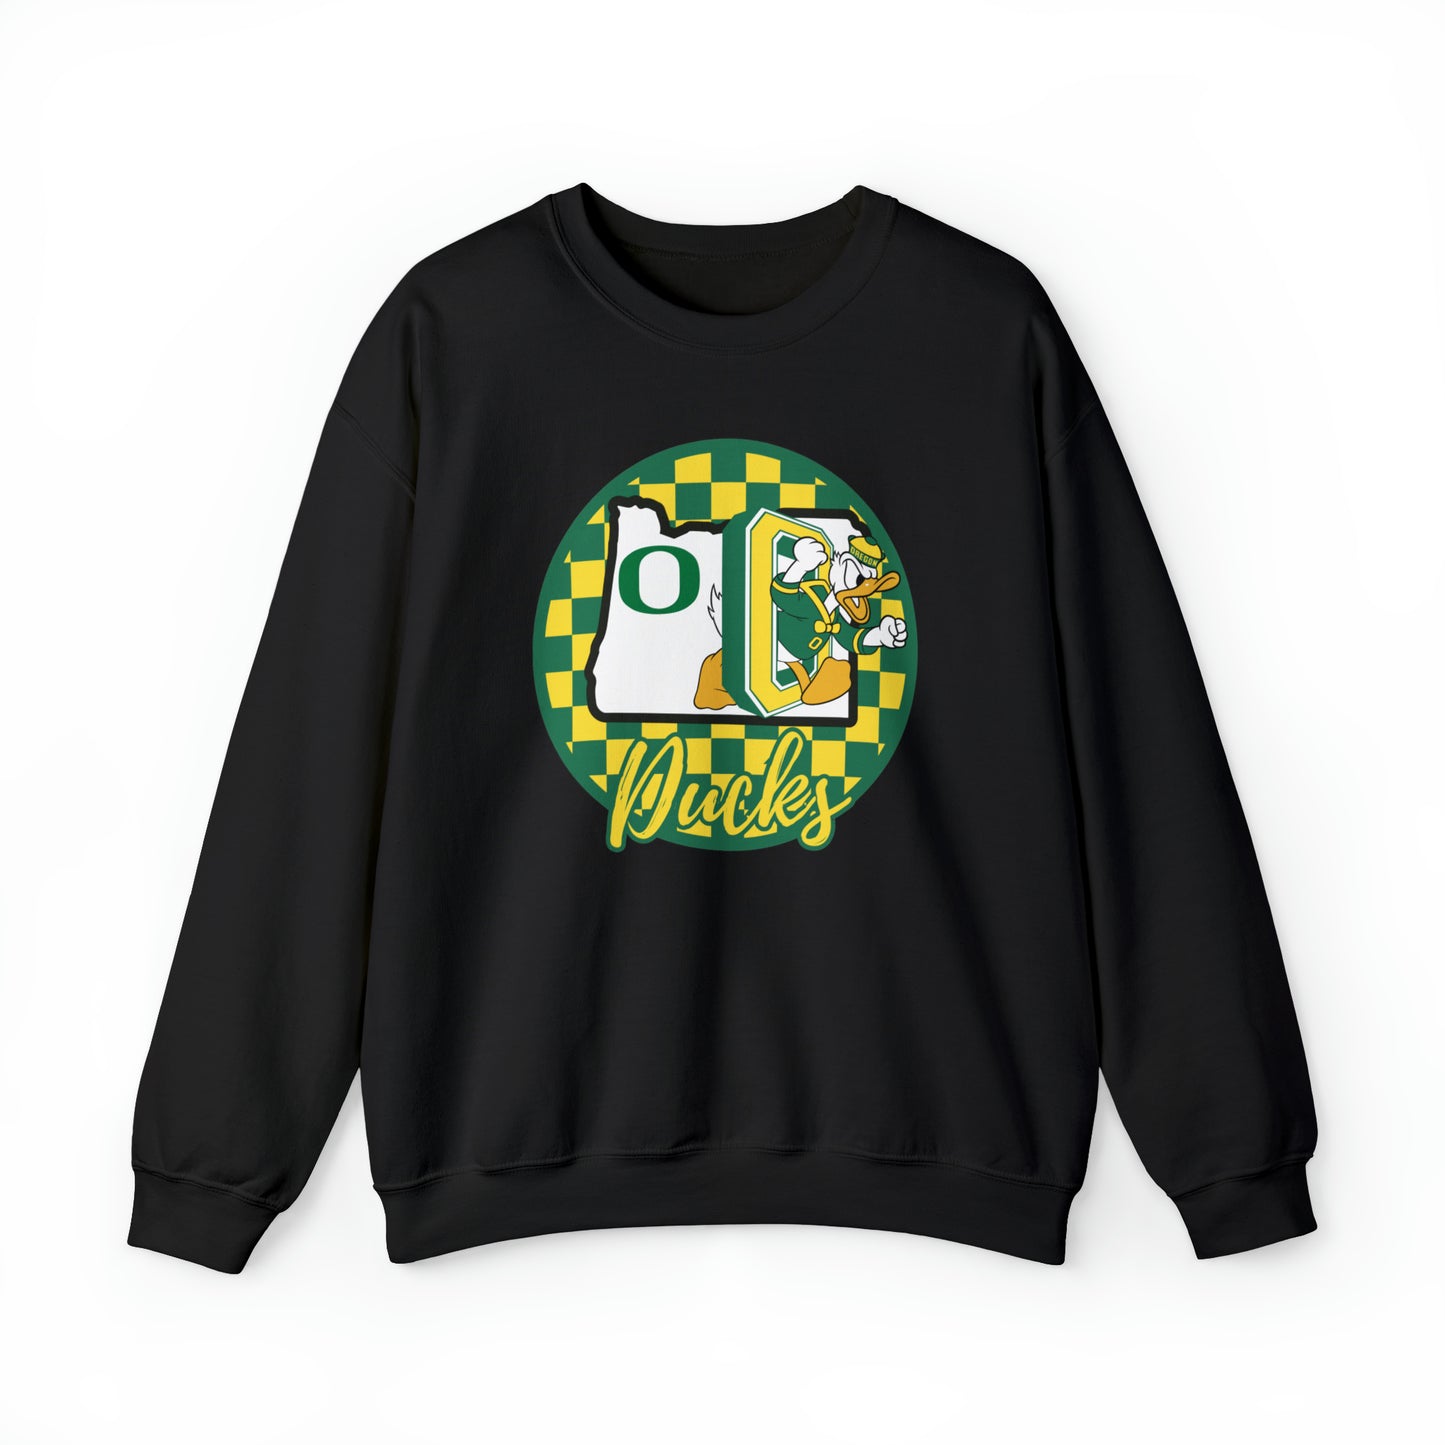 Oregon Ducks Checkered Sweatshirt